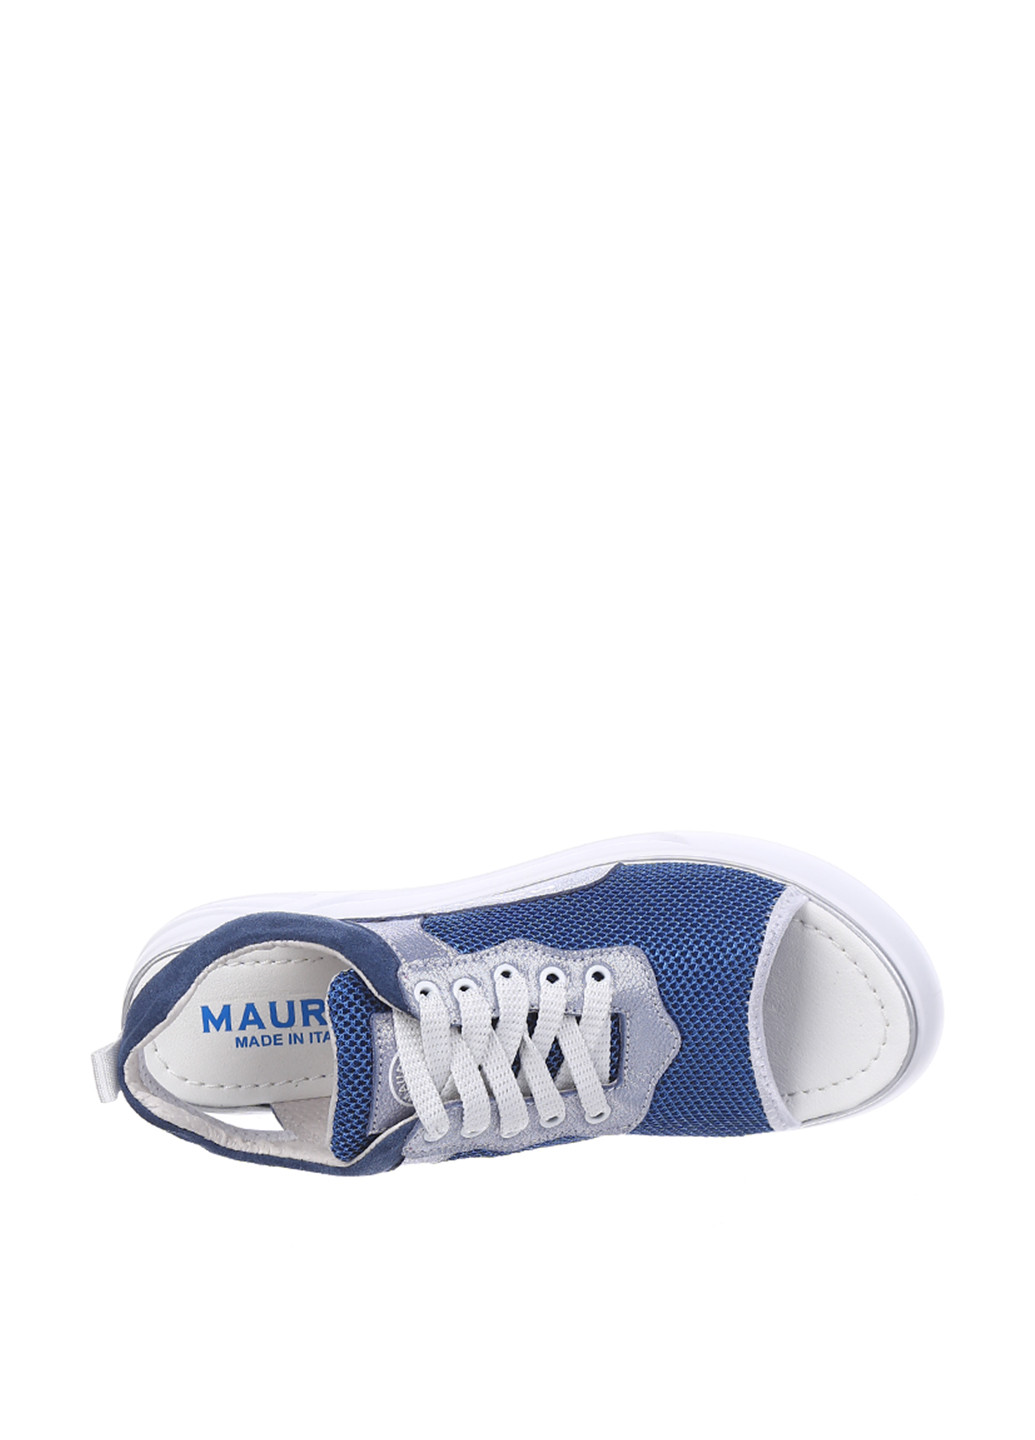 Синие босоножки Roberto Maurizi на шнурках с белой подошвой